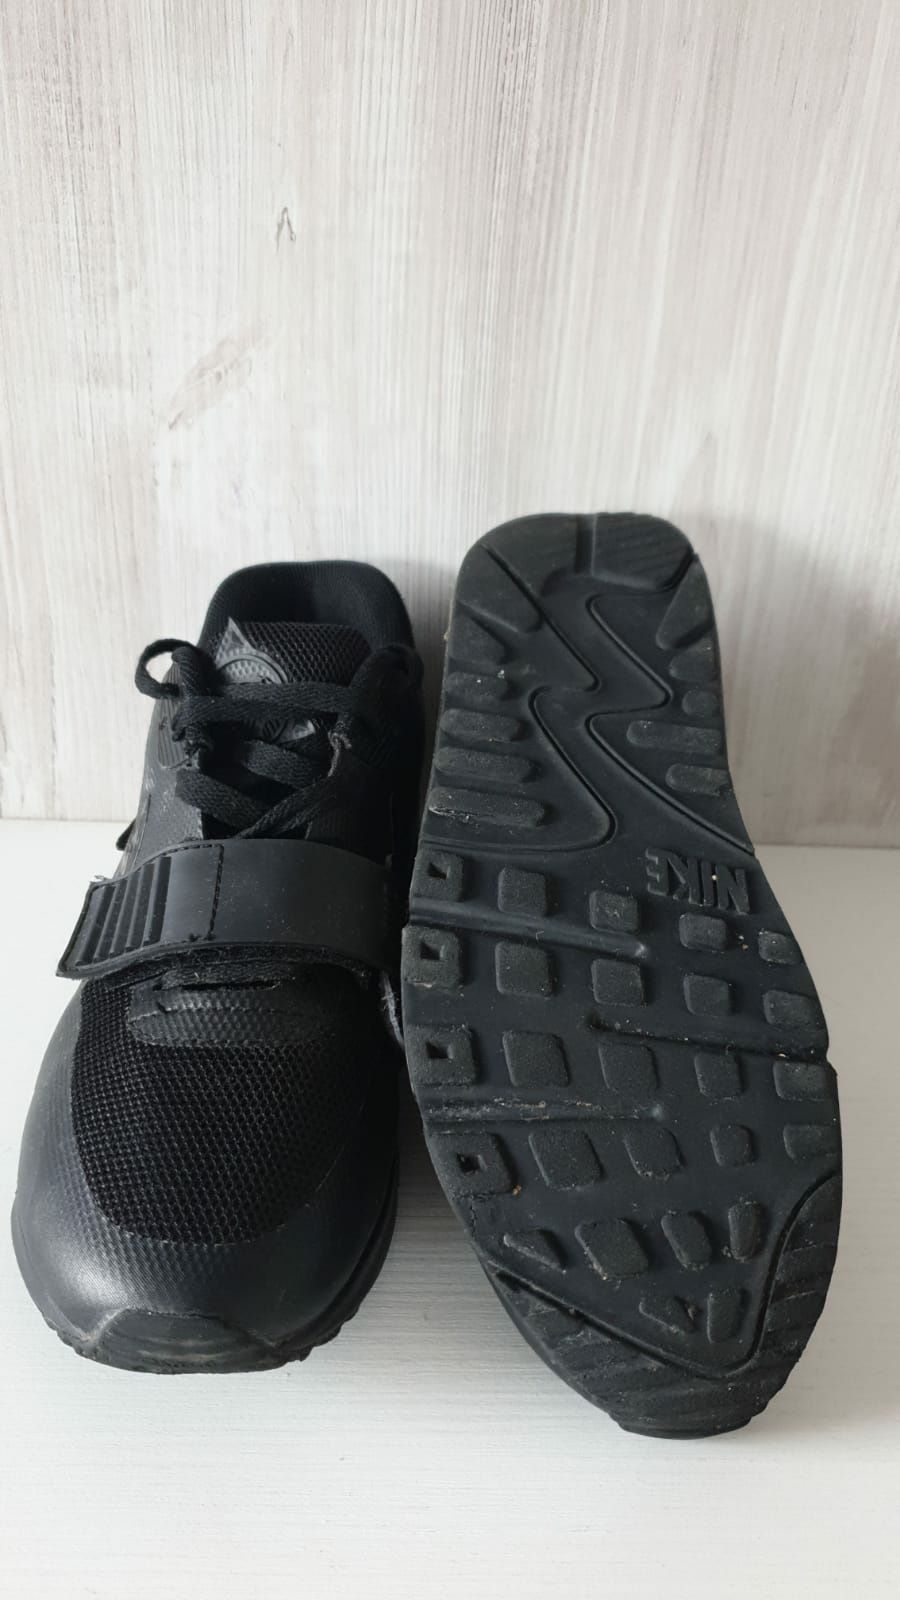 Nike Air Max 90 Yeezy 2SP All Black mărime 40 1:1